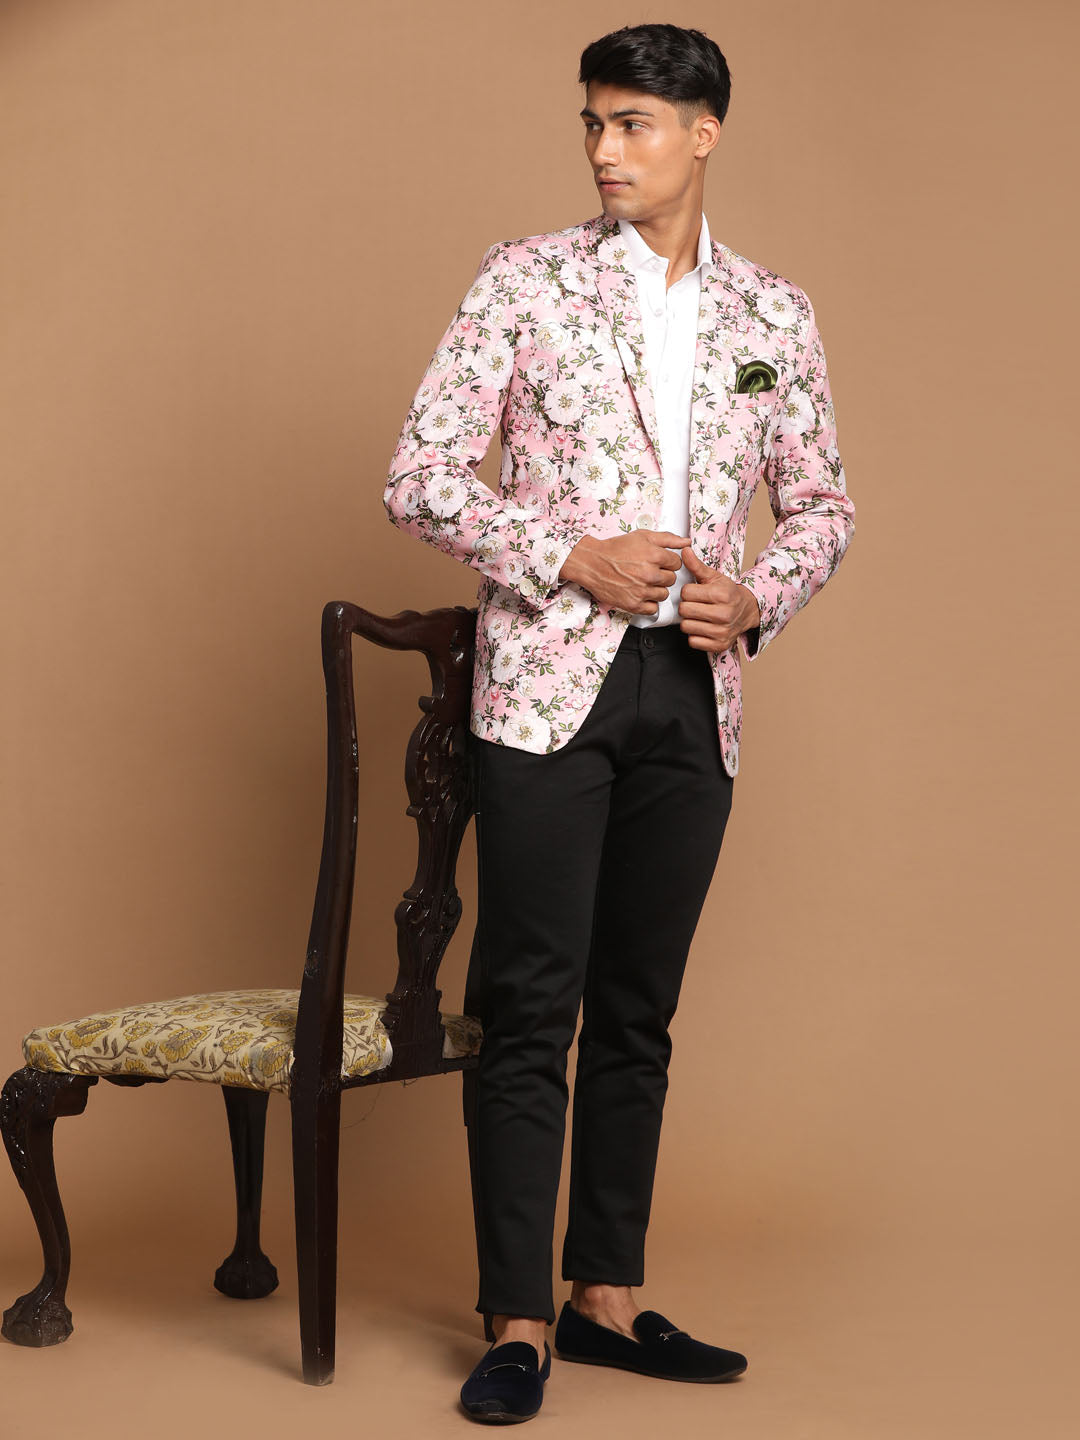 Woherb Men's Summer Blazer Fashion Korean Clothing Gradient Inspired Prints  Fancy Floral Suit Jacket Casual Slim Fit Blazzer Coat | Floral suit jacket,  Fashion korean, Blazer fashion